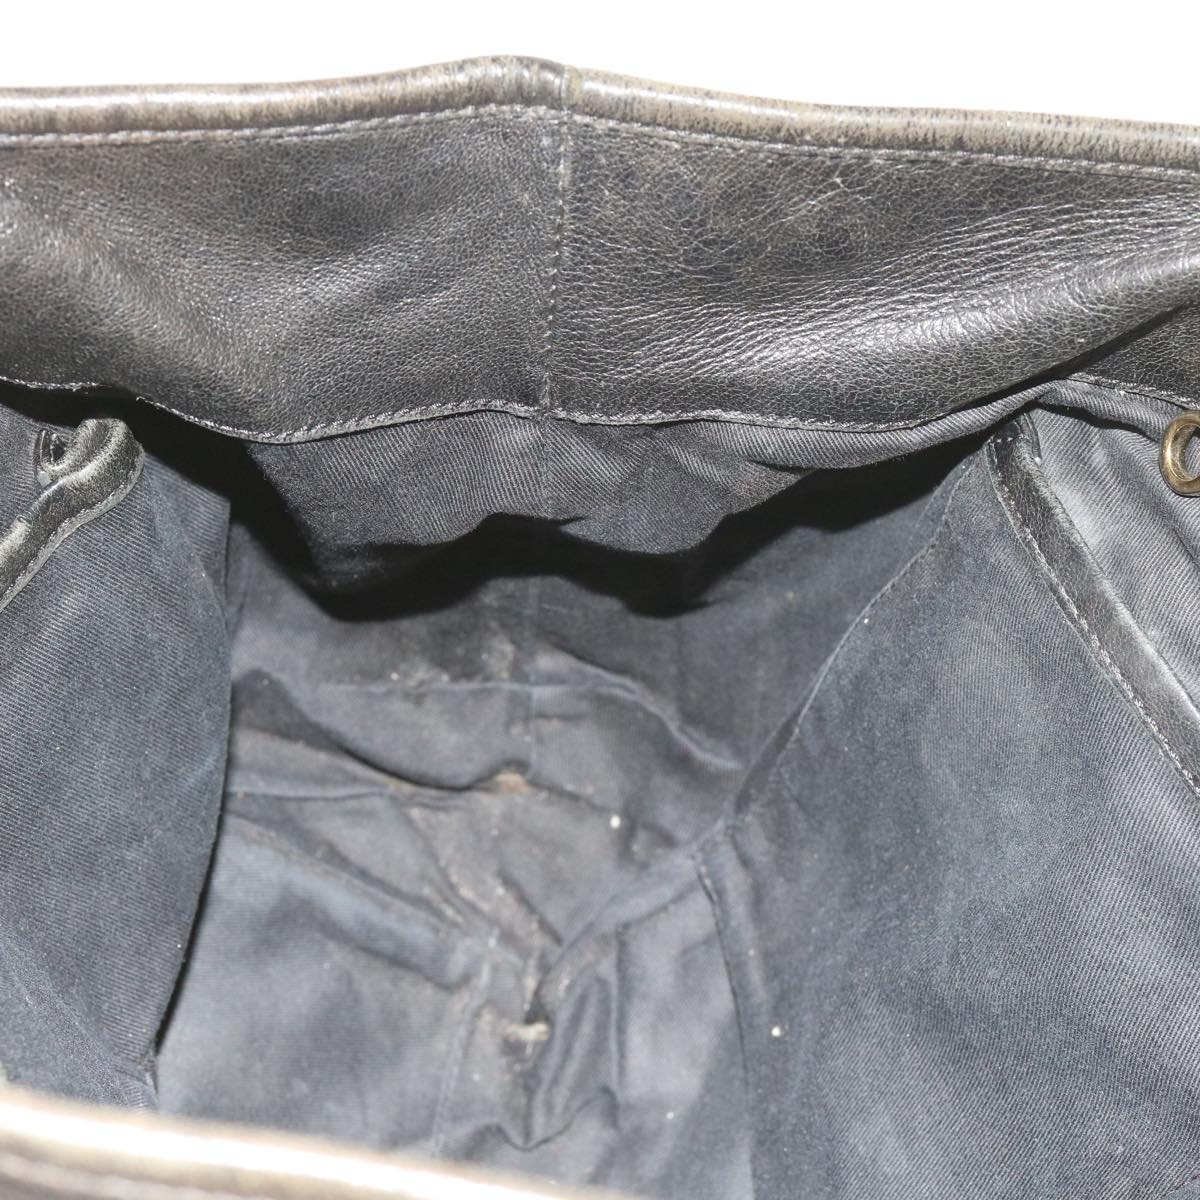 Chloe Etel Shoulder Bag Leather Black Auth bs9350